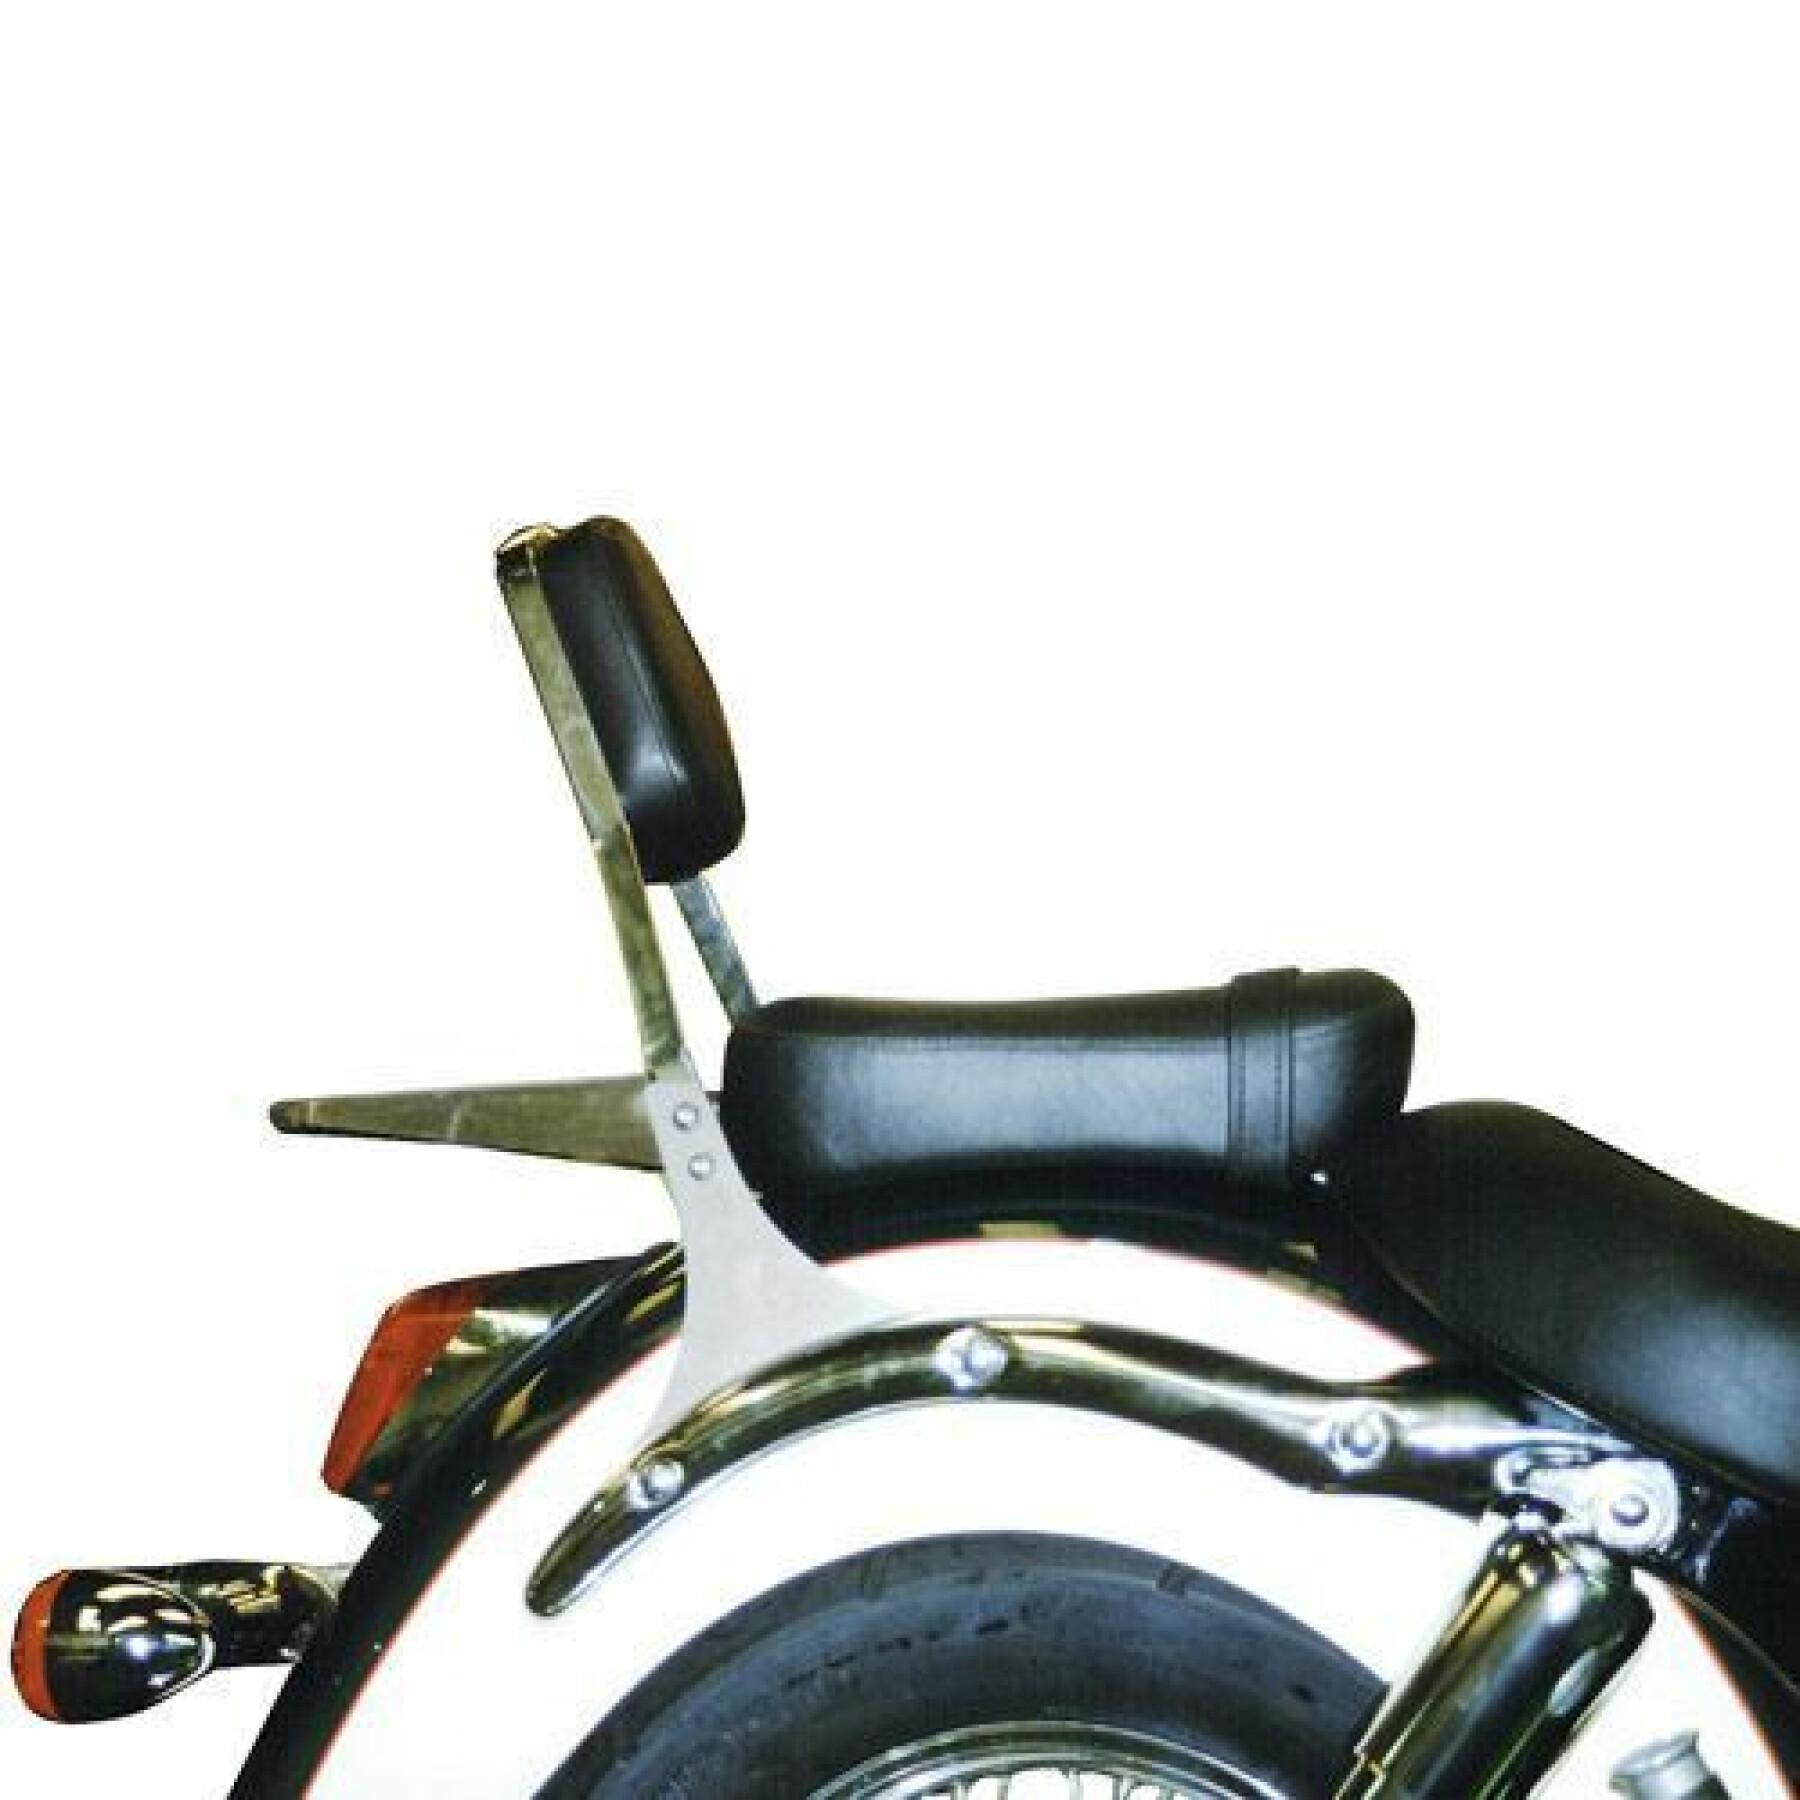 Dosseret top case moto Sissybar Givi Honda cmx500 rebel